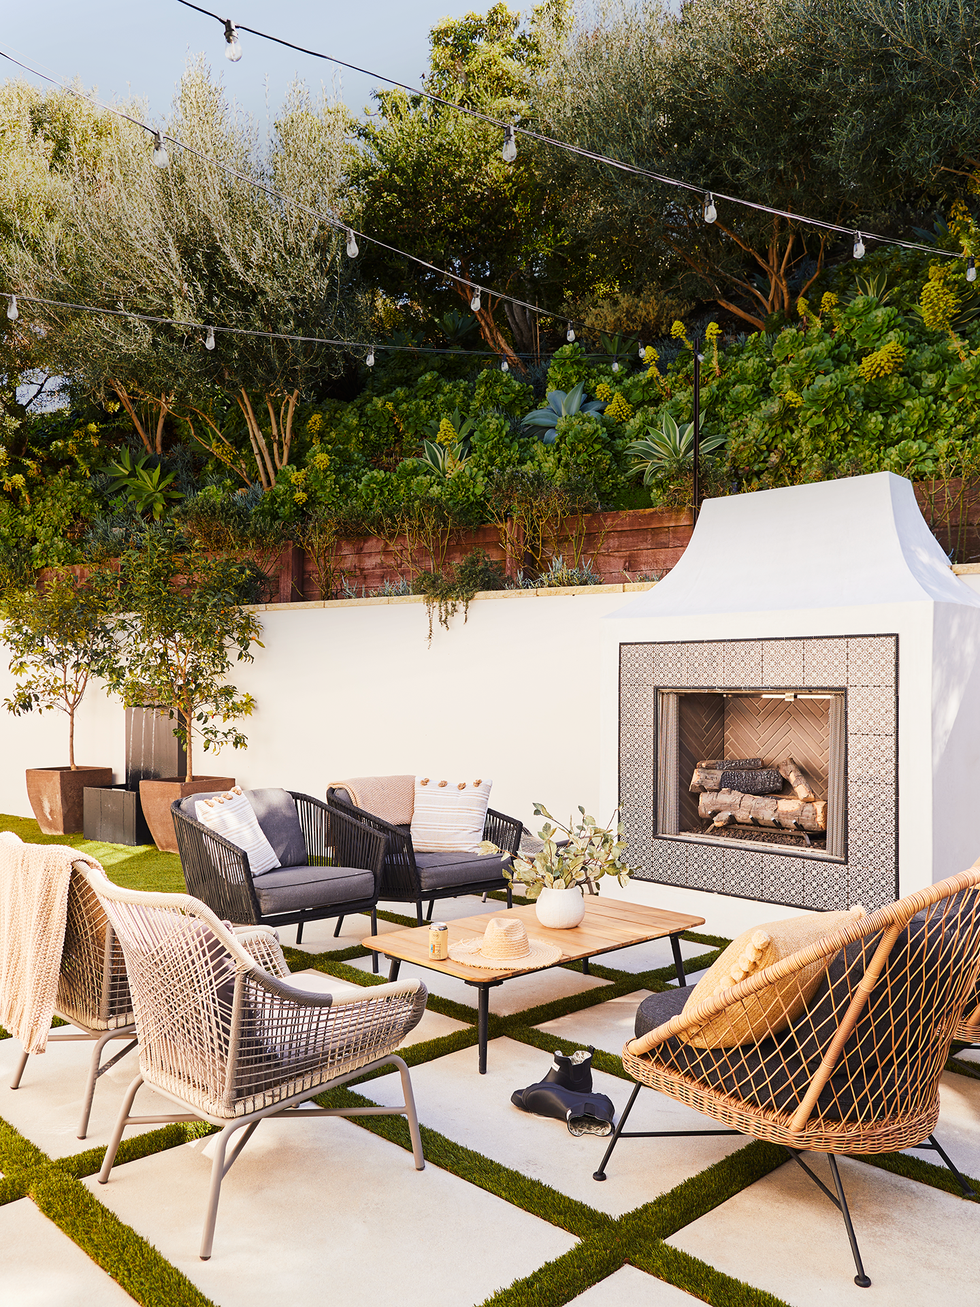 Get Outside with DIY Backyard Decor